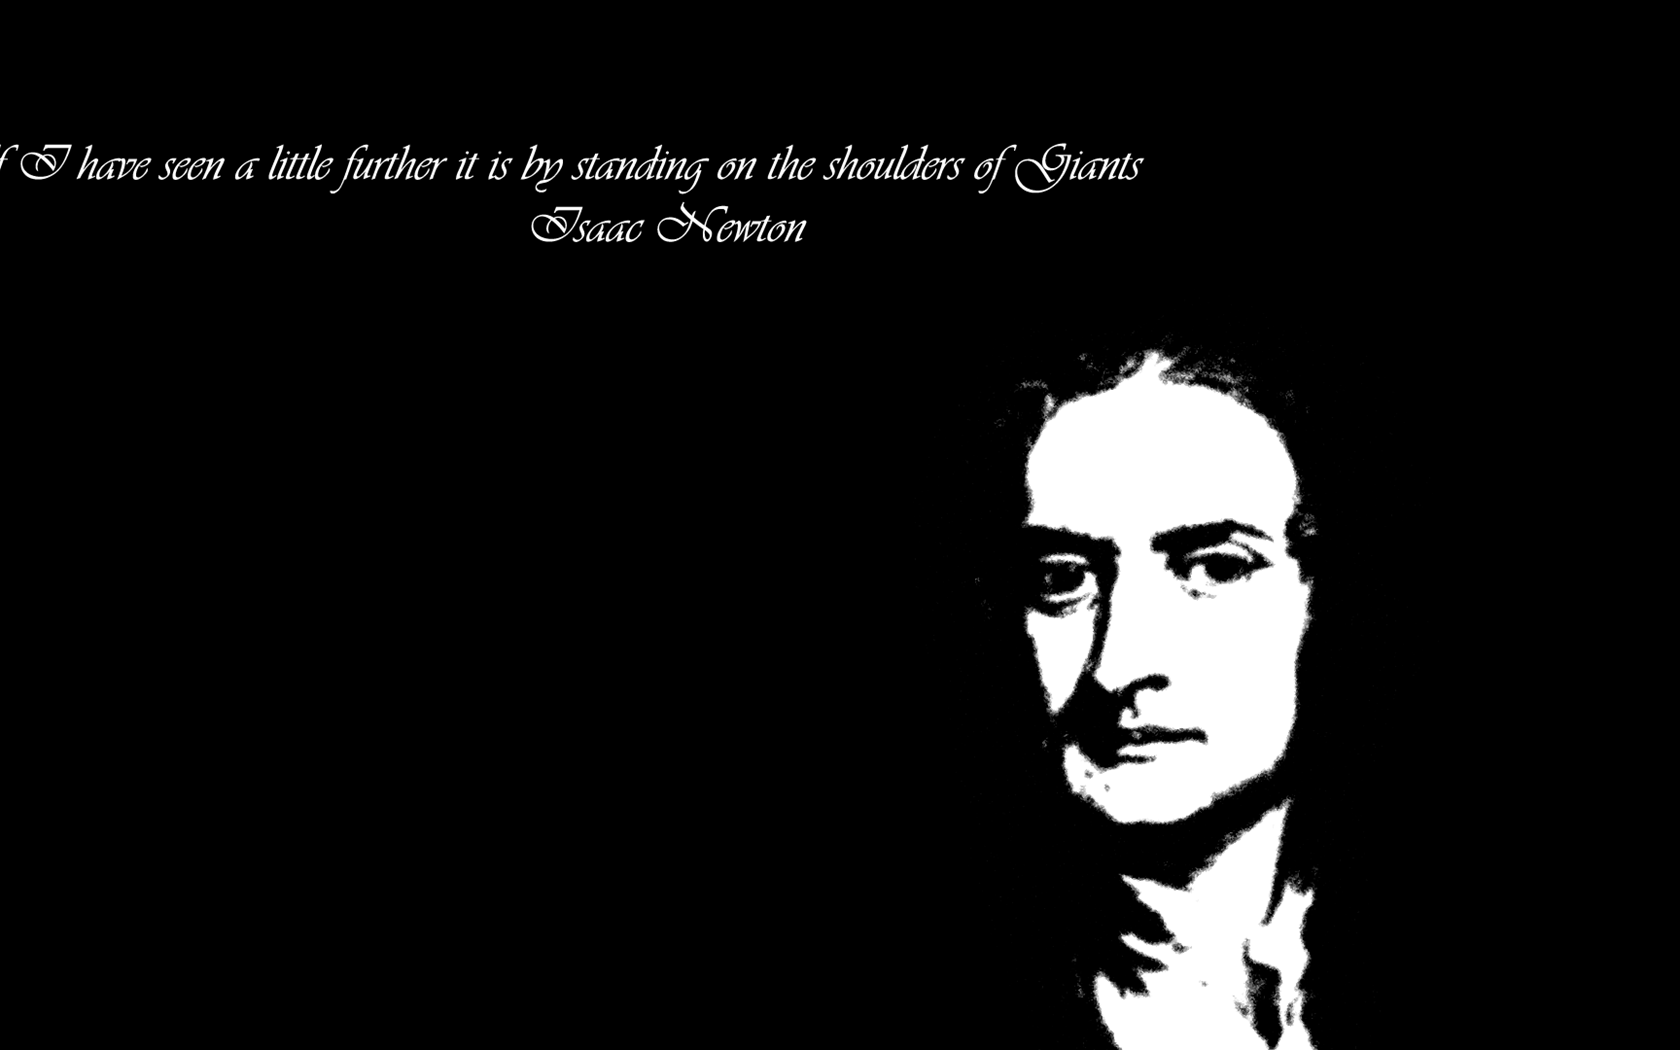 Isaac Newton quote HD Wallpaper